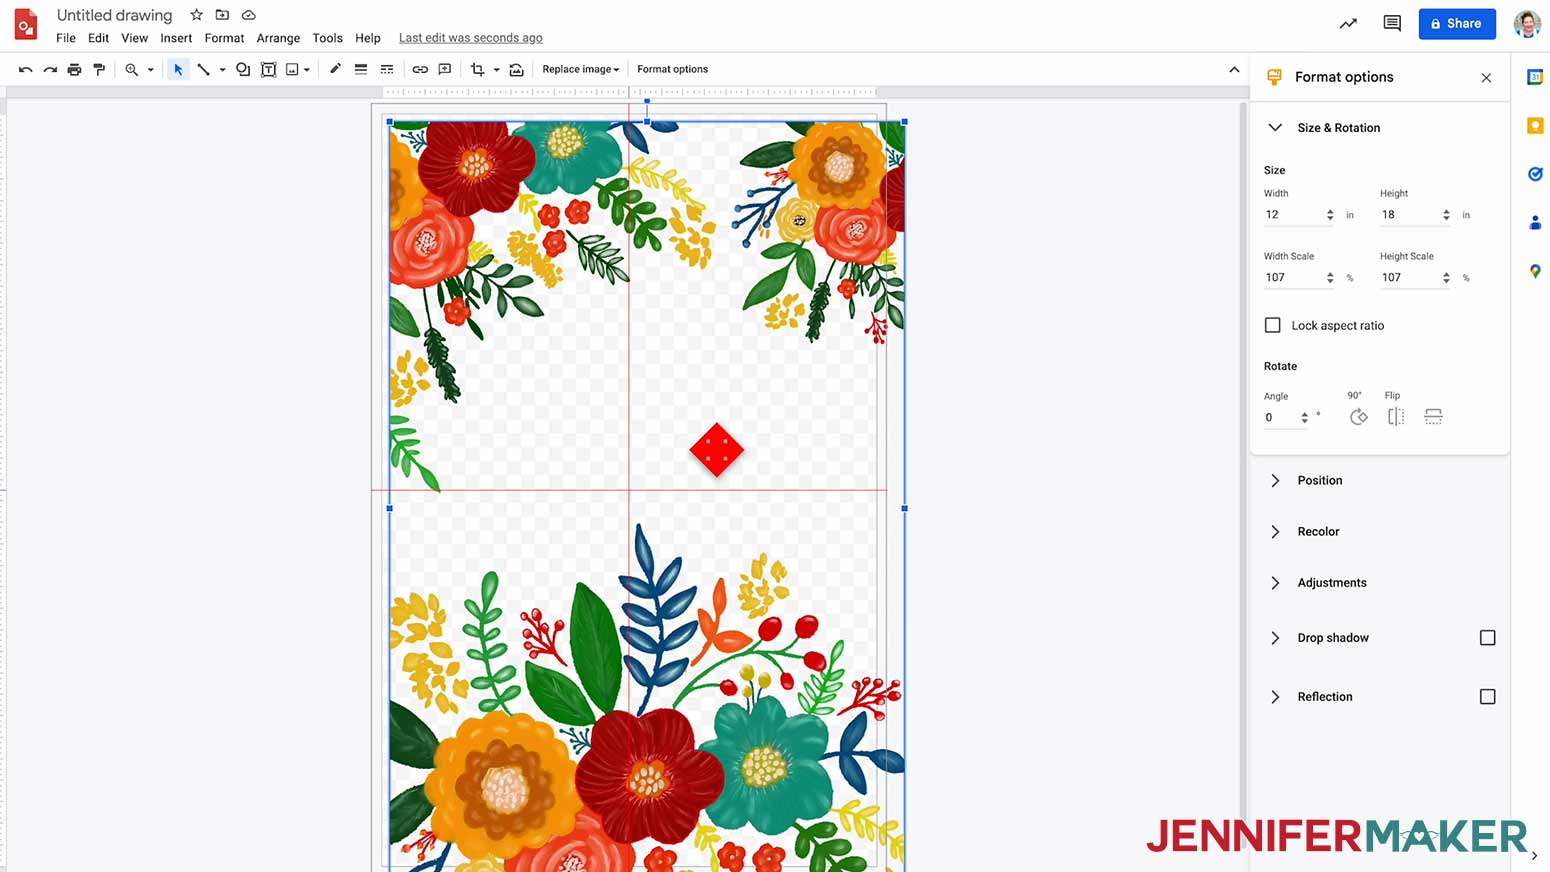 Garden Flag (Blank) - Embroidery Designs & Patterns